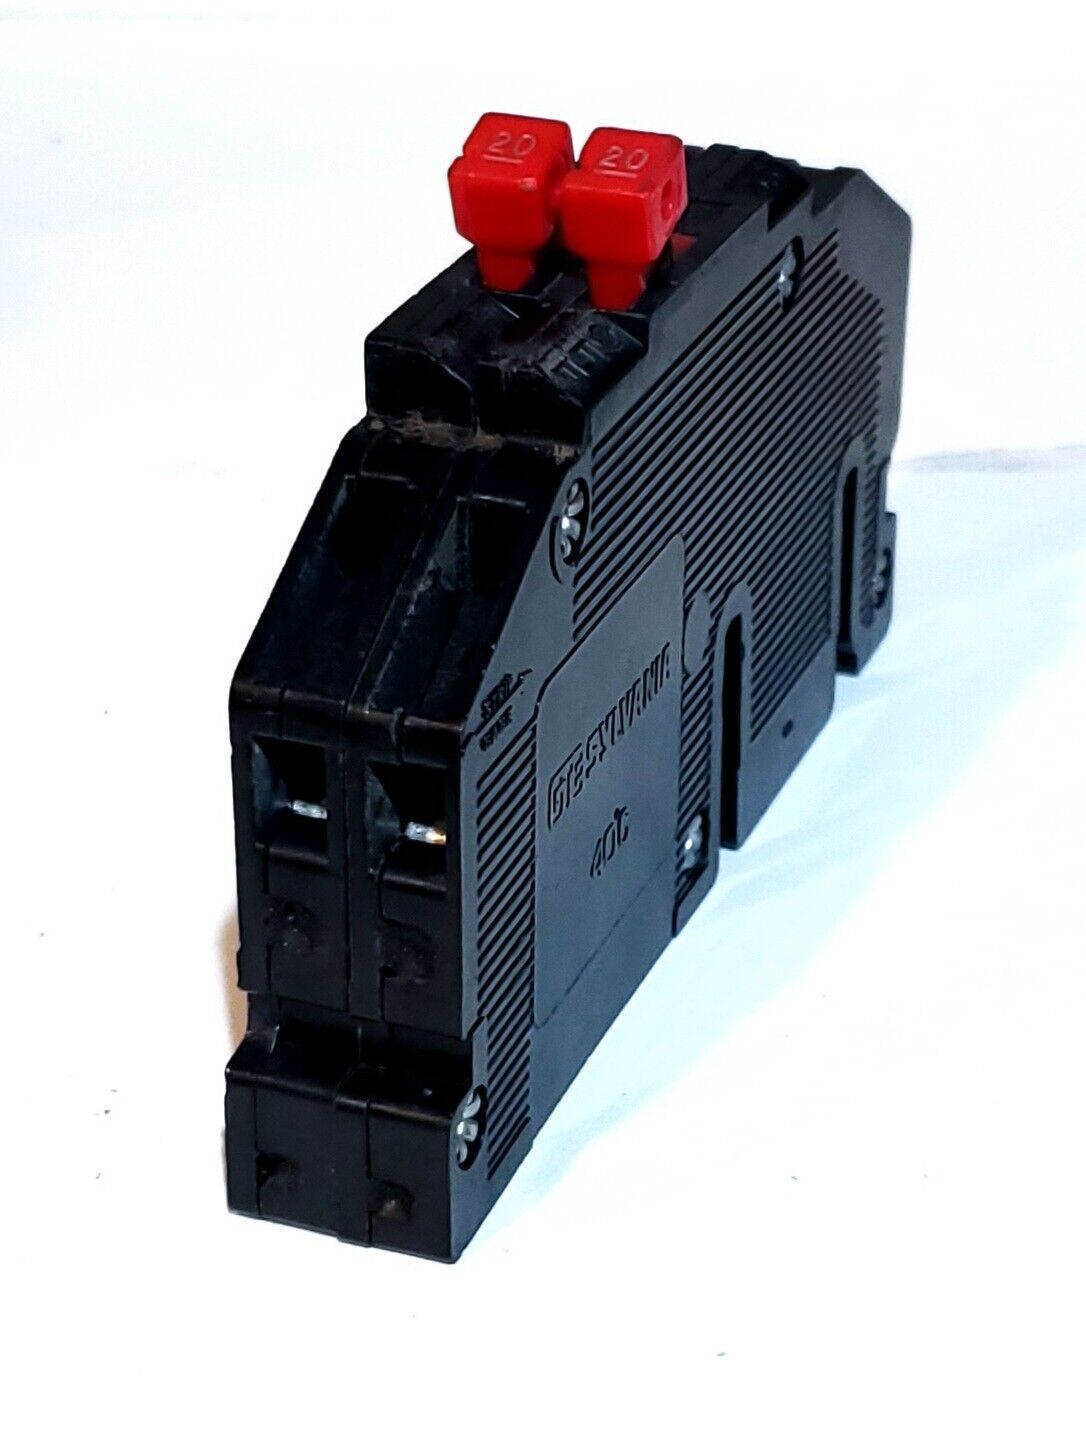 Zinsco RC38-20 2-Pole 20-Amp Circuit Breaker - Red Toggle